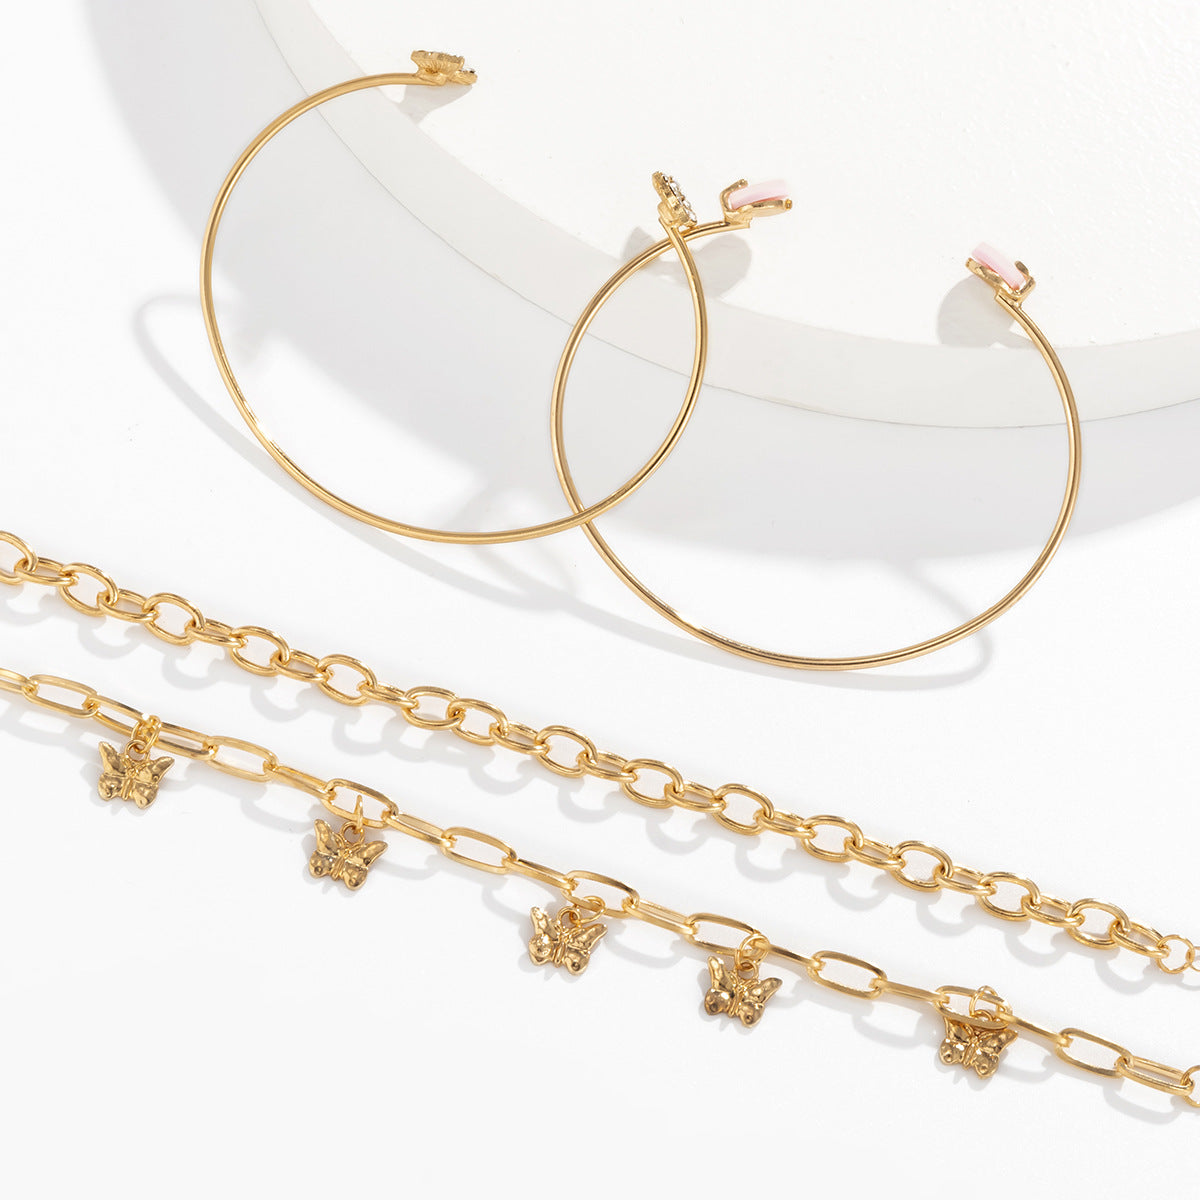 Elegant Rhinestone Butterfly Bracelet Set with Tassel Pendant Decor - Premium Cross-border European Jewelry for Women by Planderful Collection